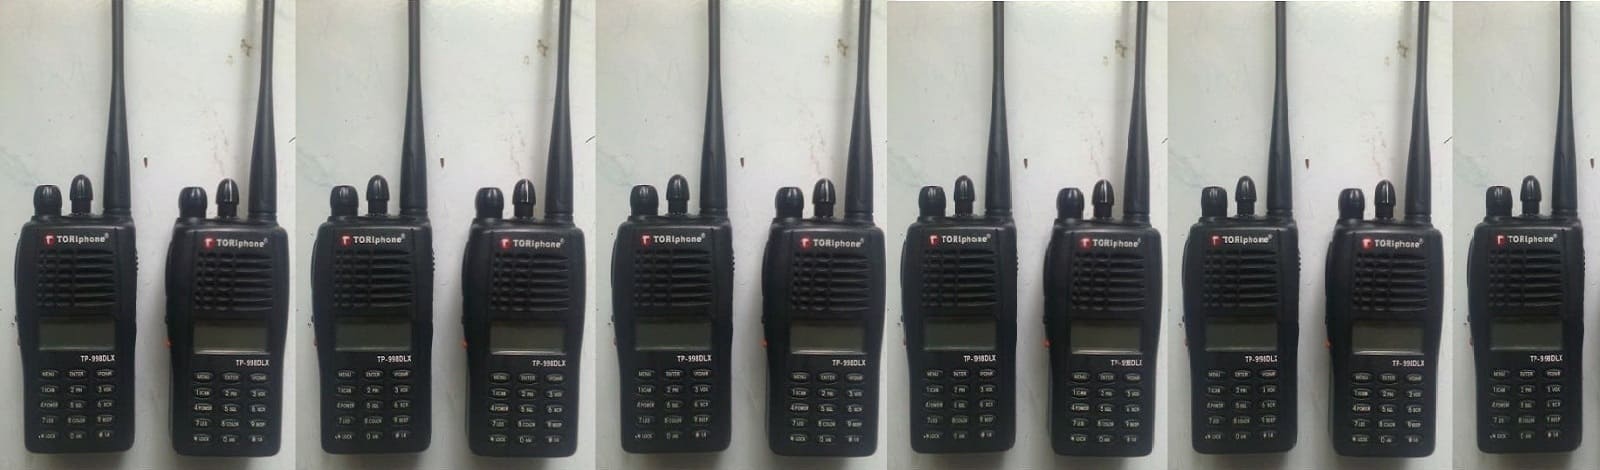 HT Toriphone TP 98 DLX | Sewa HT Beji Timur, Depok, Jawa Barat | Rental Handy Talky Depok Murah